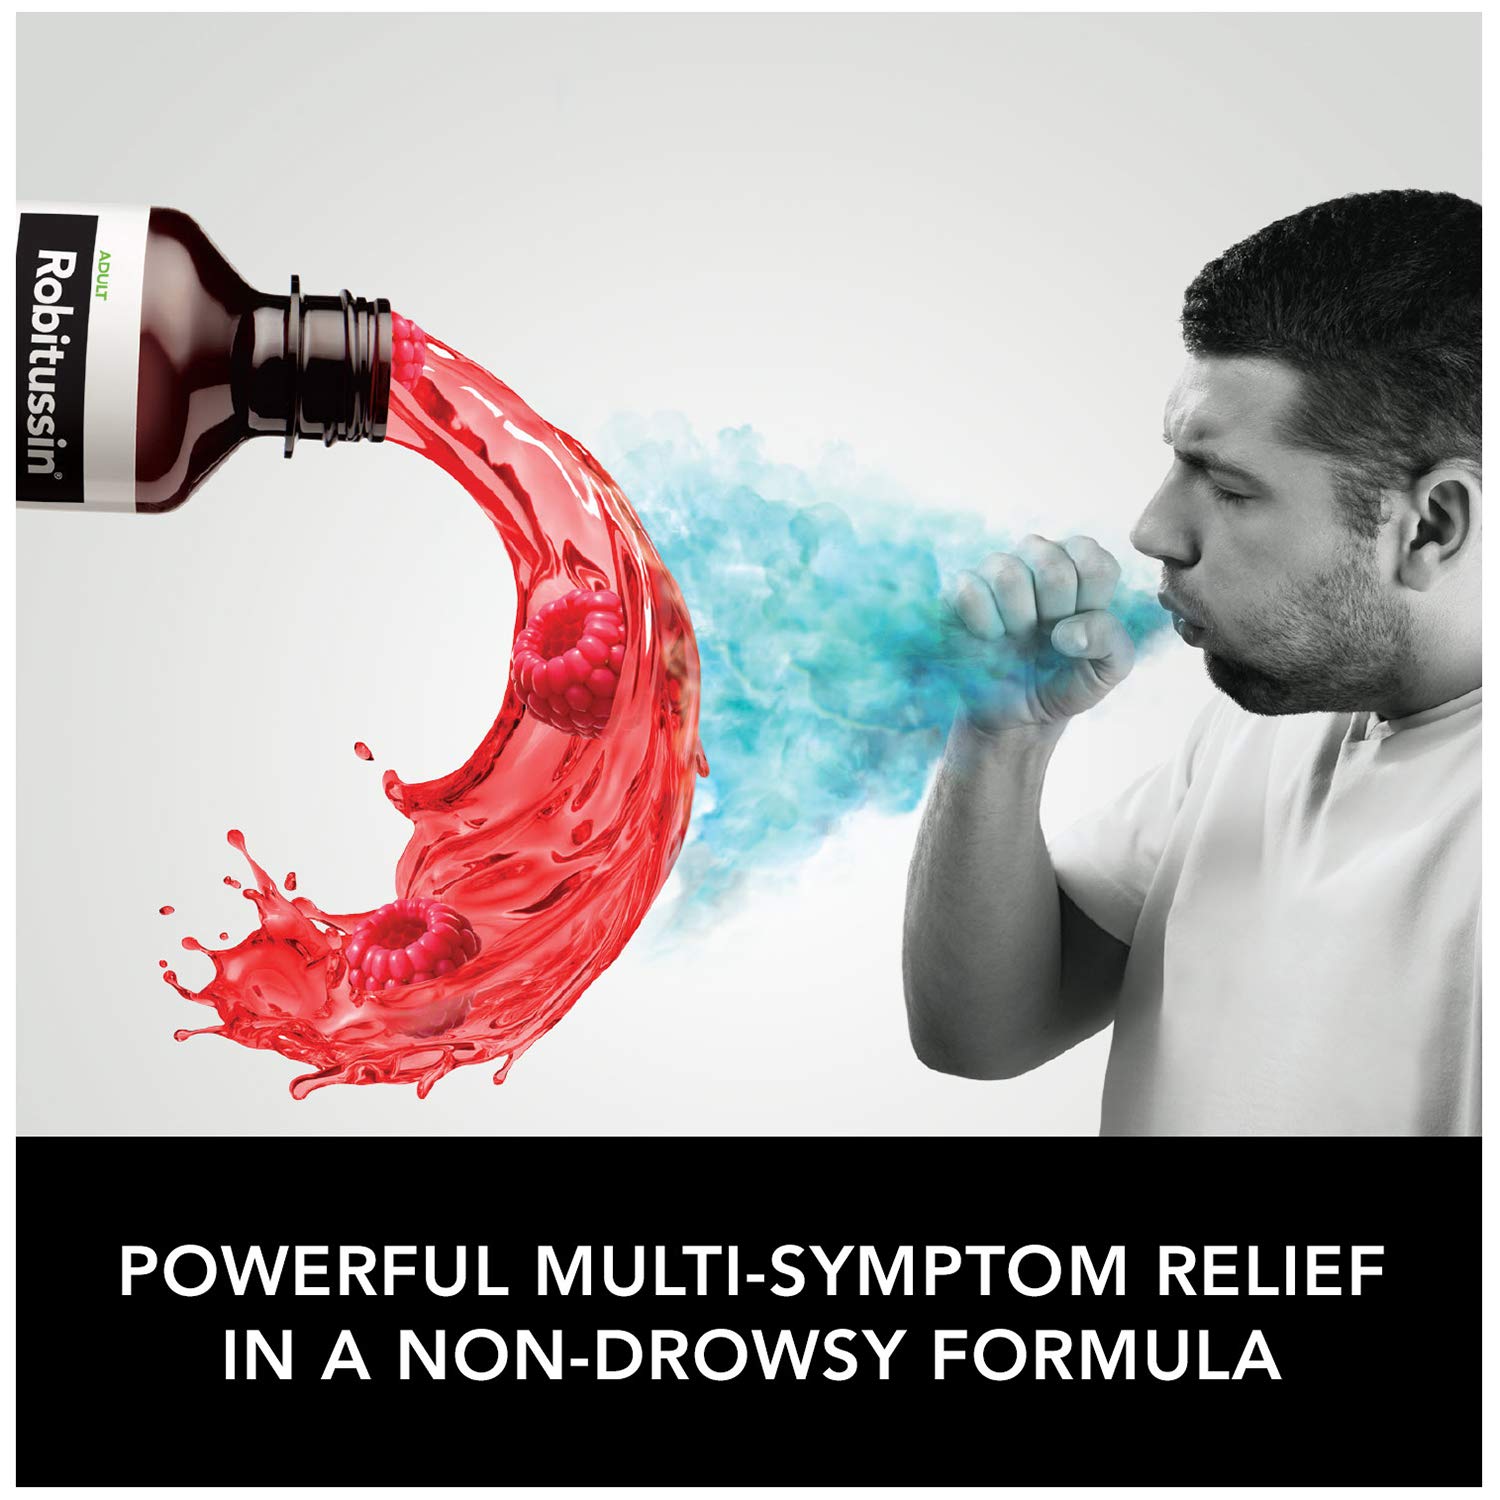 Robitussin Maximum Strength Severe Multi-Symptom Cough Cold 4 fl. oz.+ Flu Day & Night 4 fl. oz. Bottles